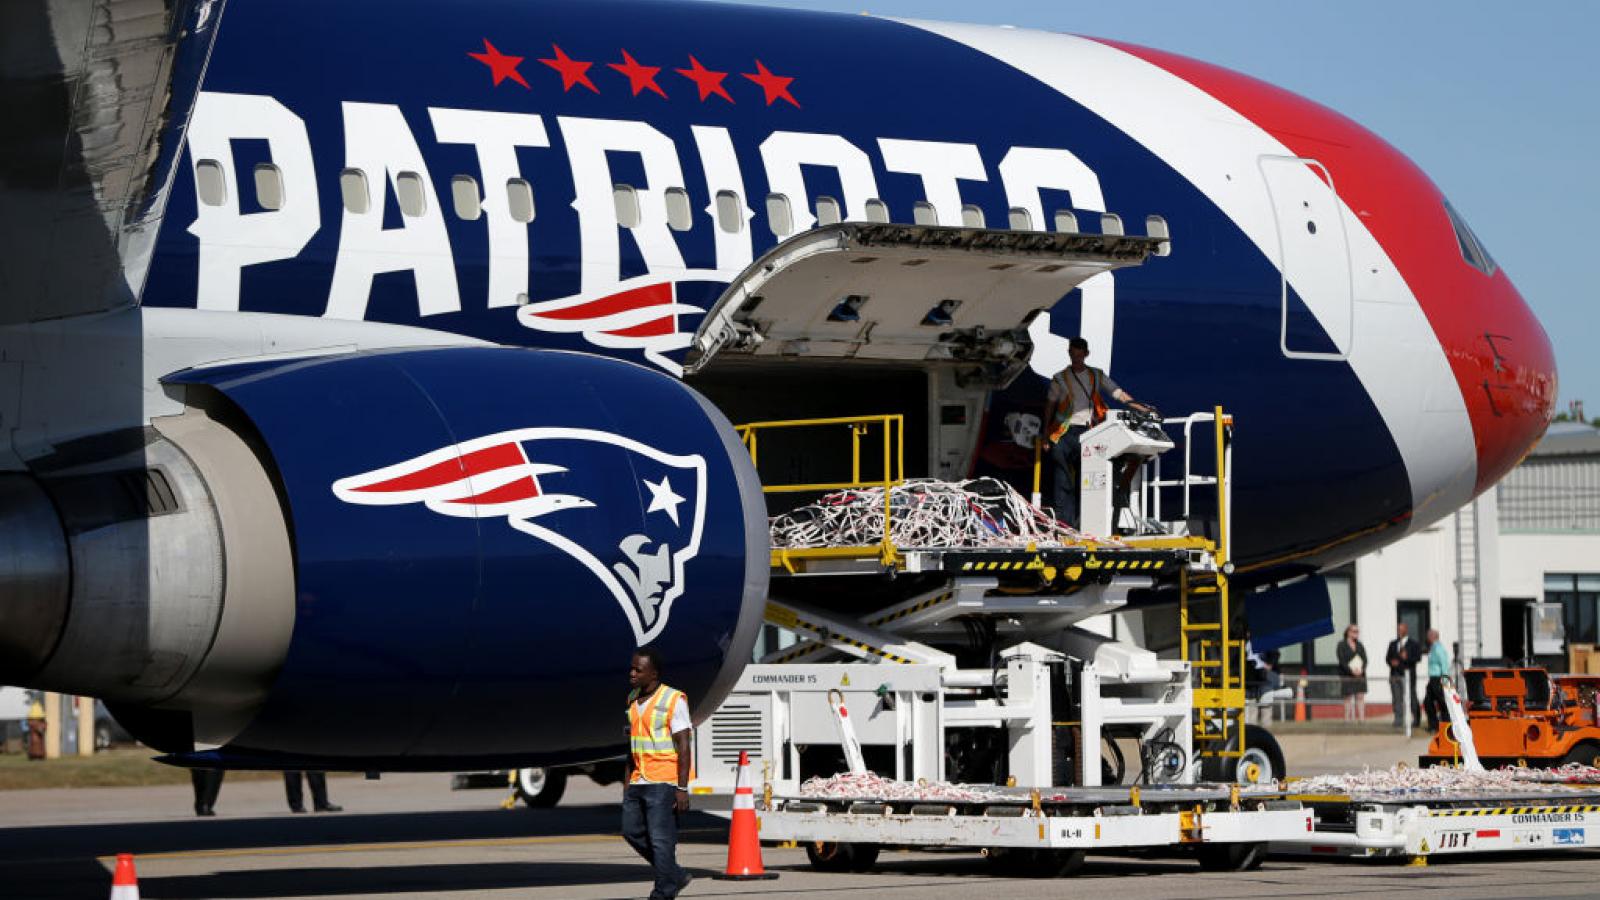 The New England Patriots' customized team plane